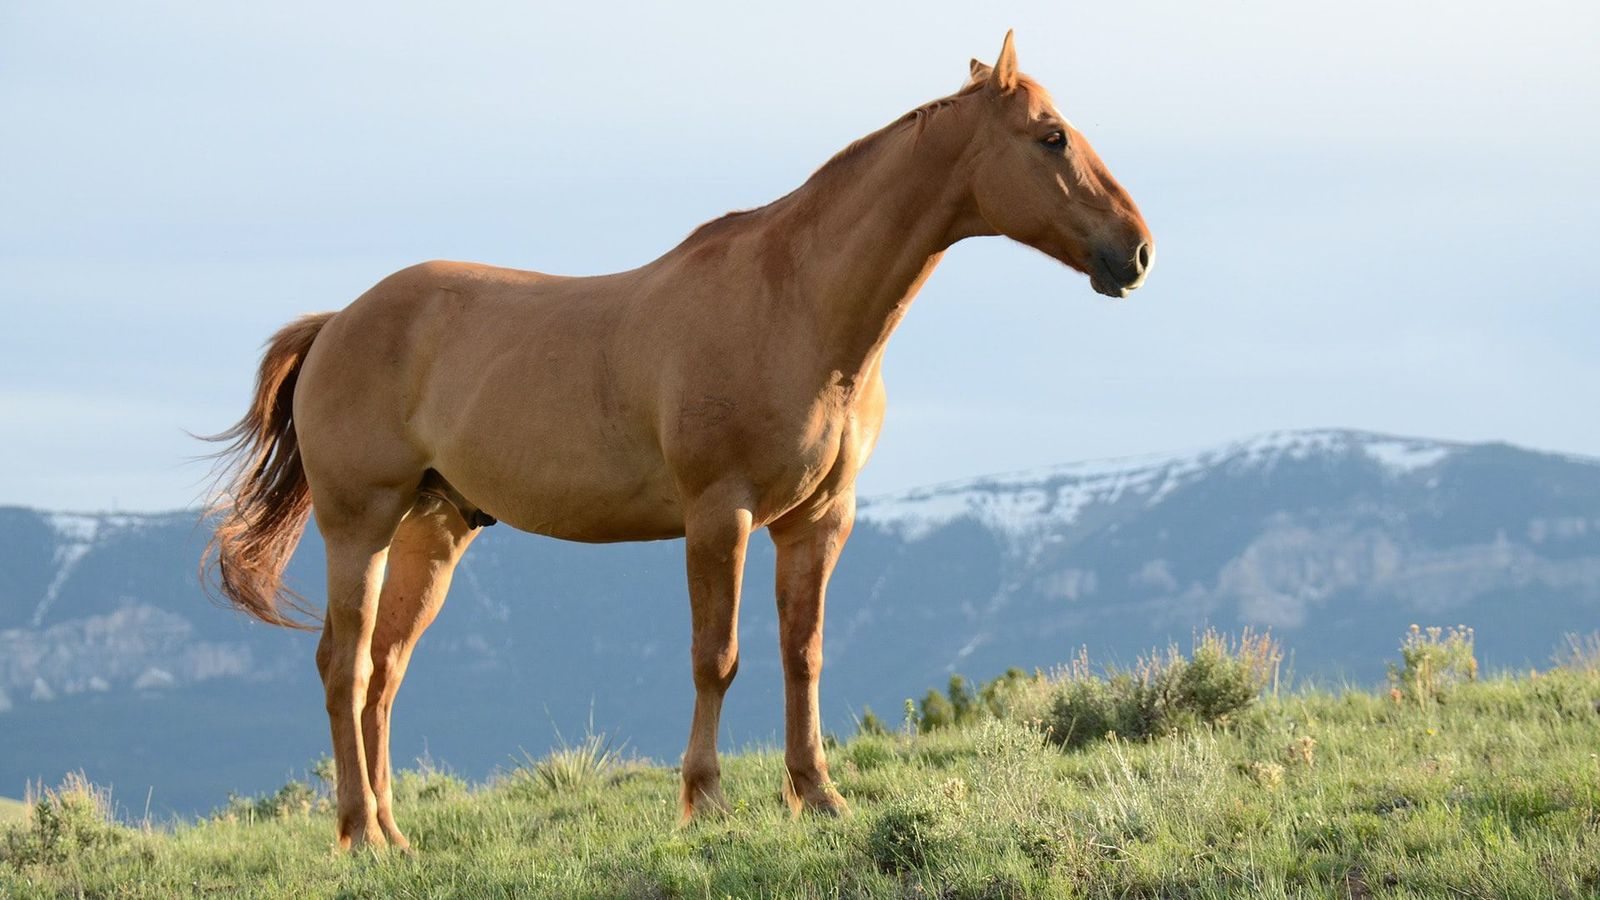 West Nile virus disease in horses - Sable horse standing outdoors